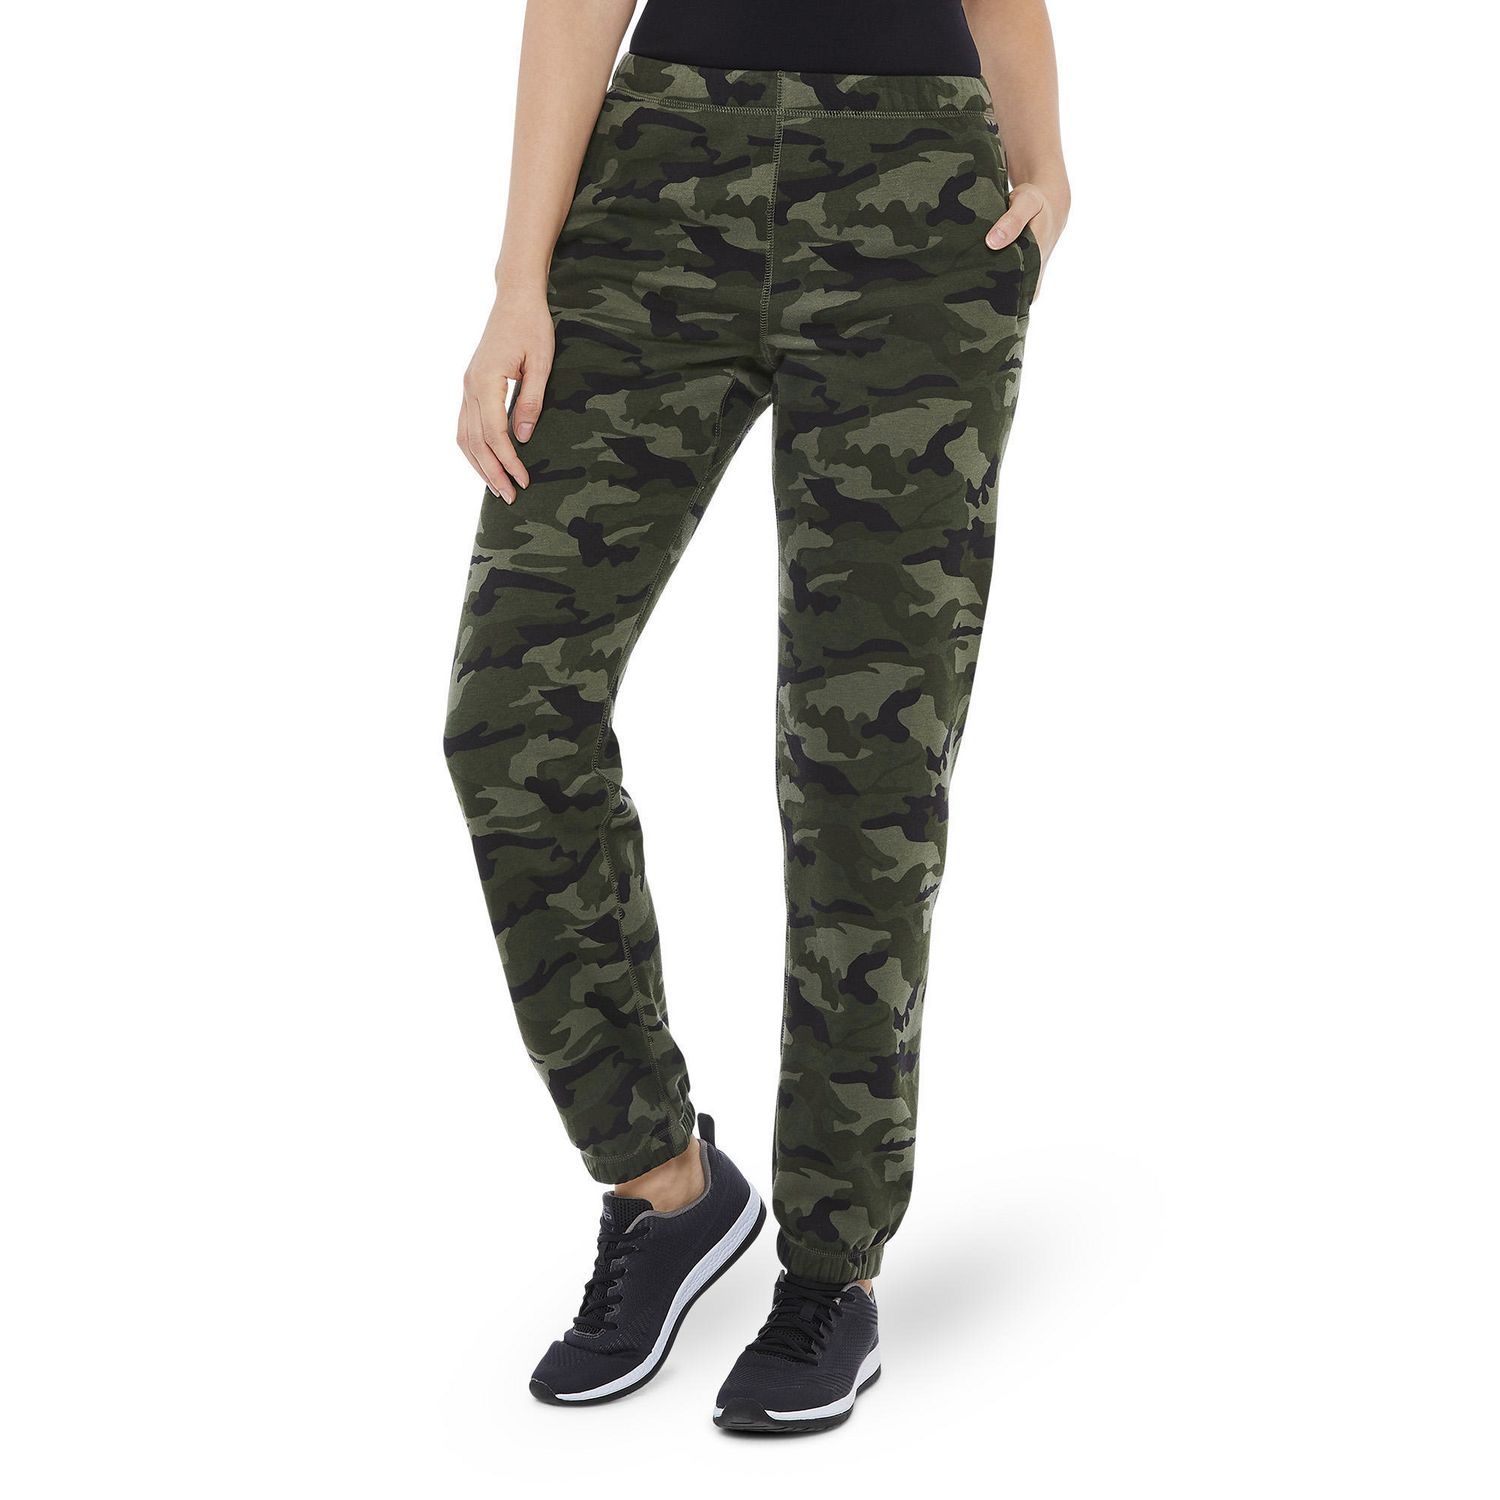 Buy > camo jogger pants womens > in stock